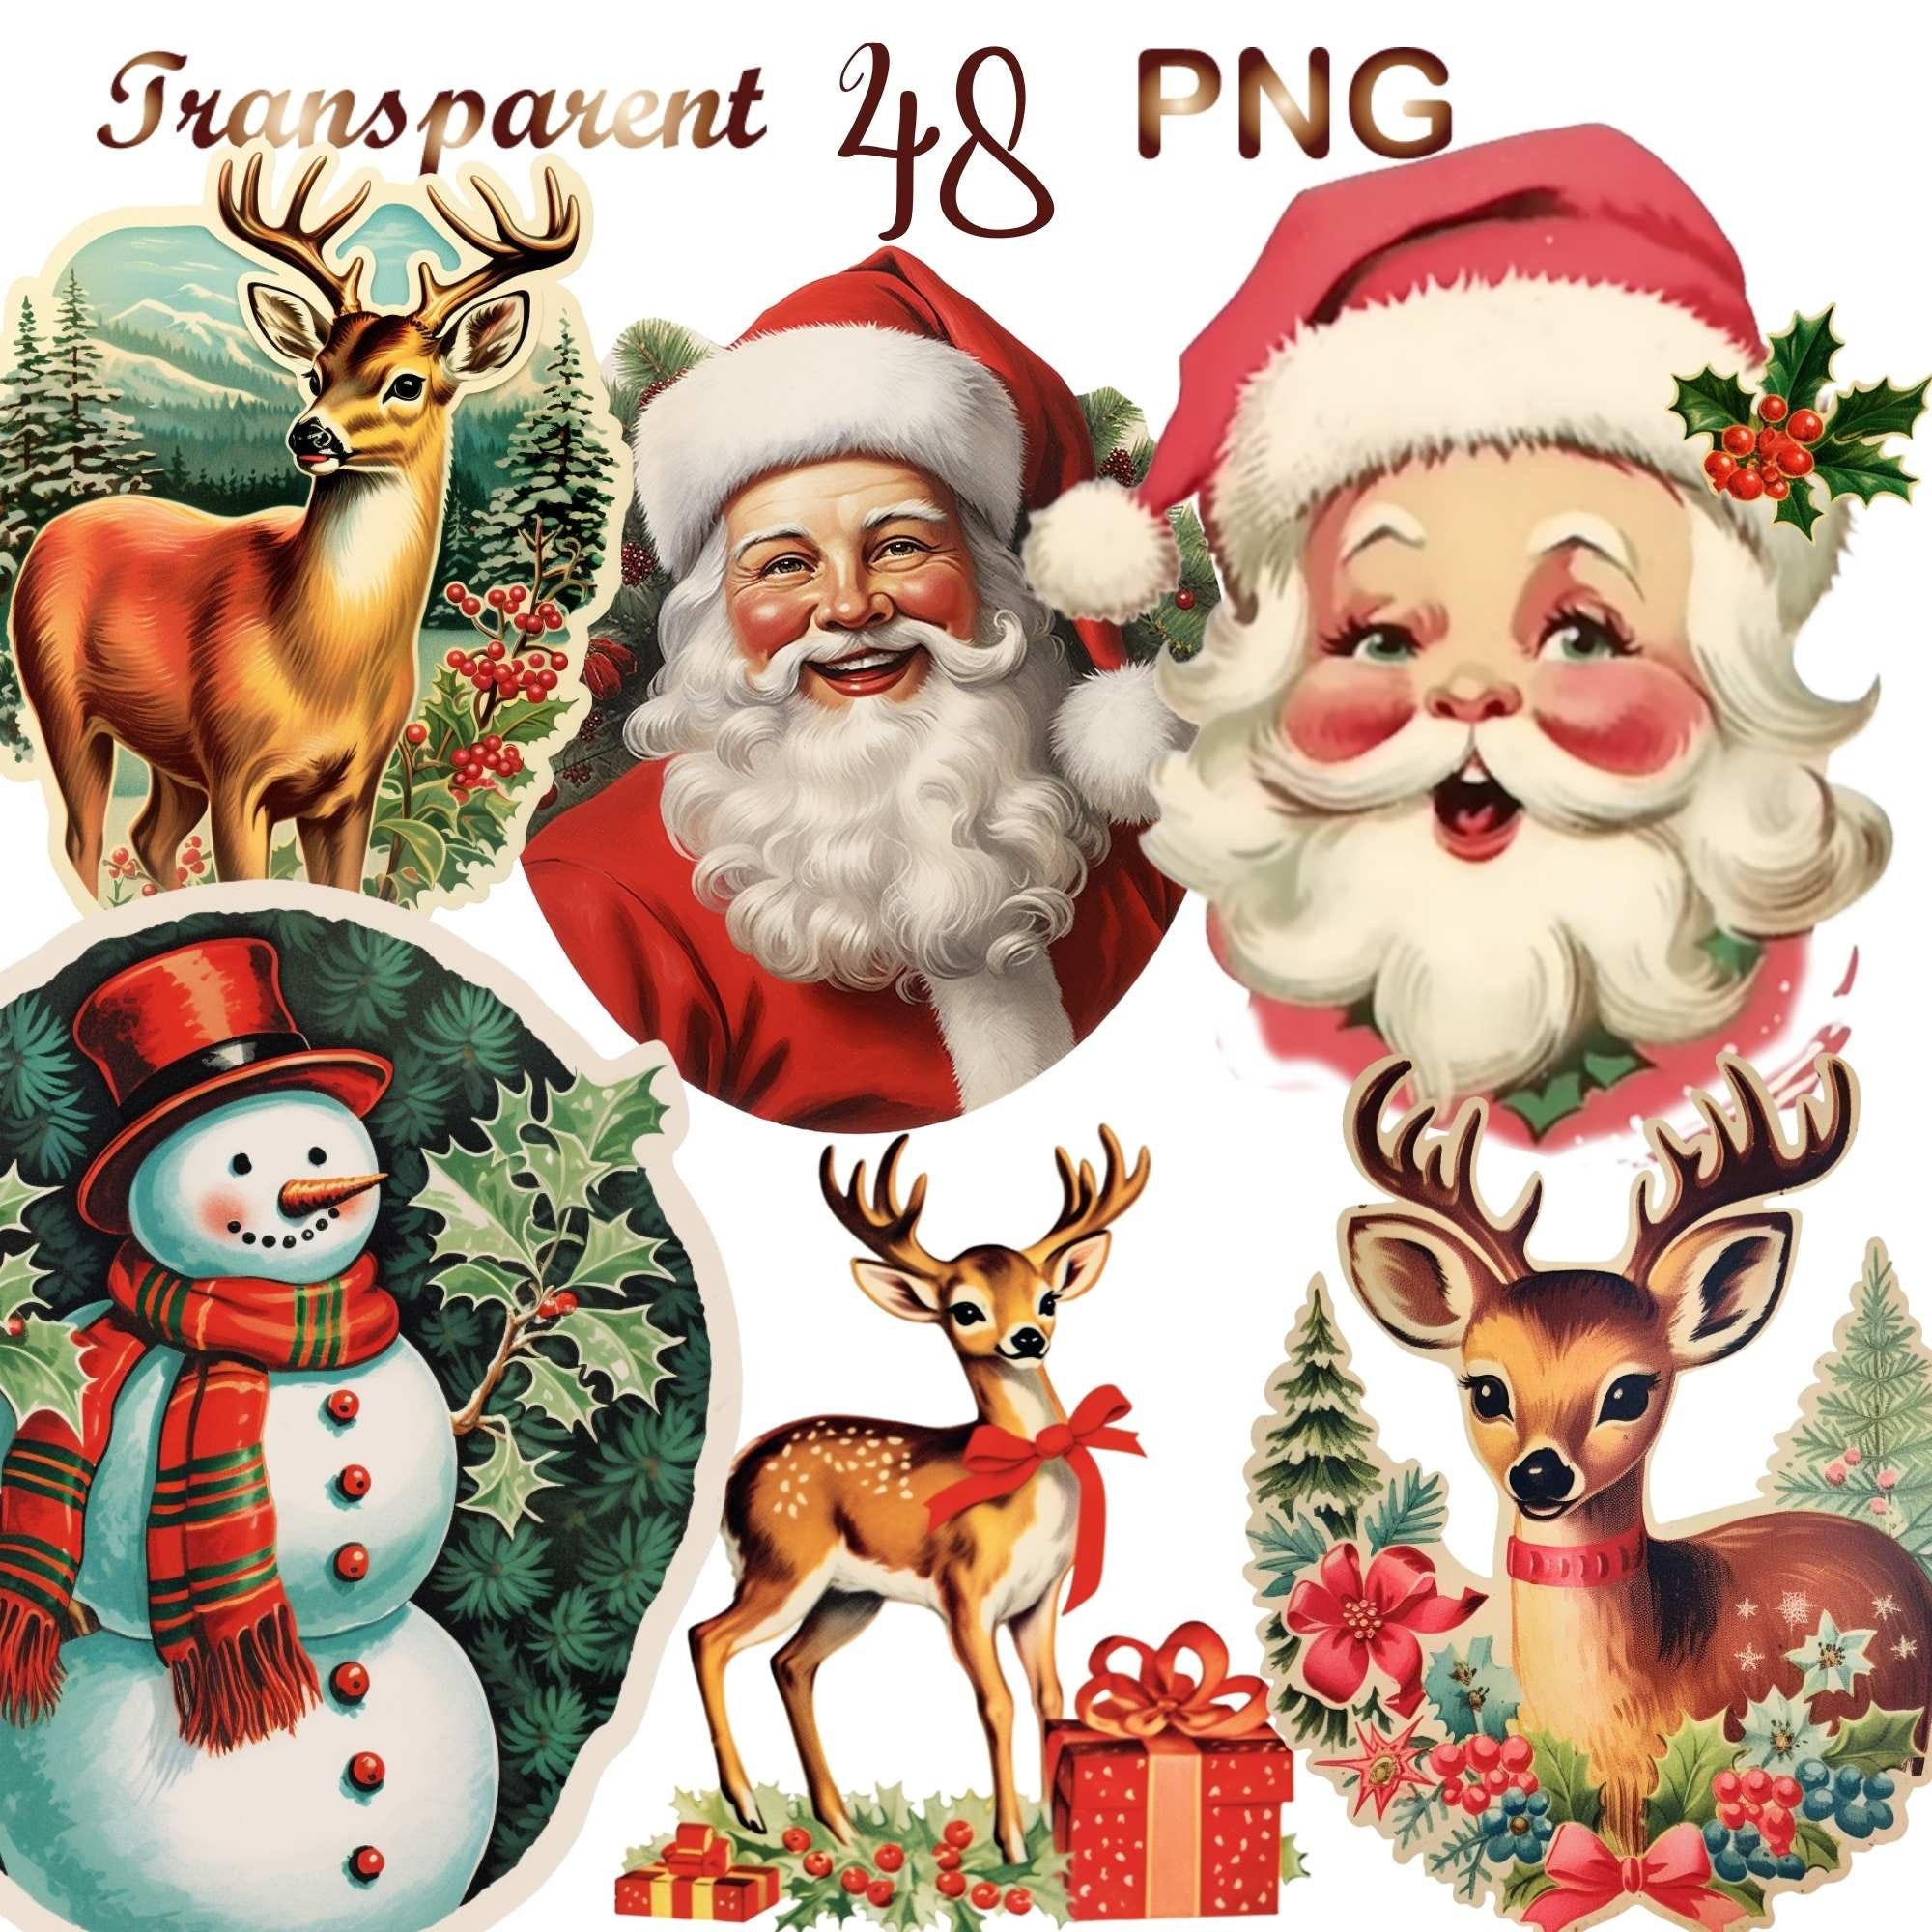 48 Christmas Bundle PNG for Sublimation, Commercial Use Allowed, Pink Santa Graphic, Reindeer Download,Snowman Shirt Design, Vintage Clipart